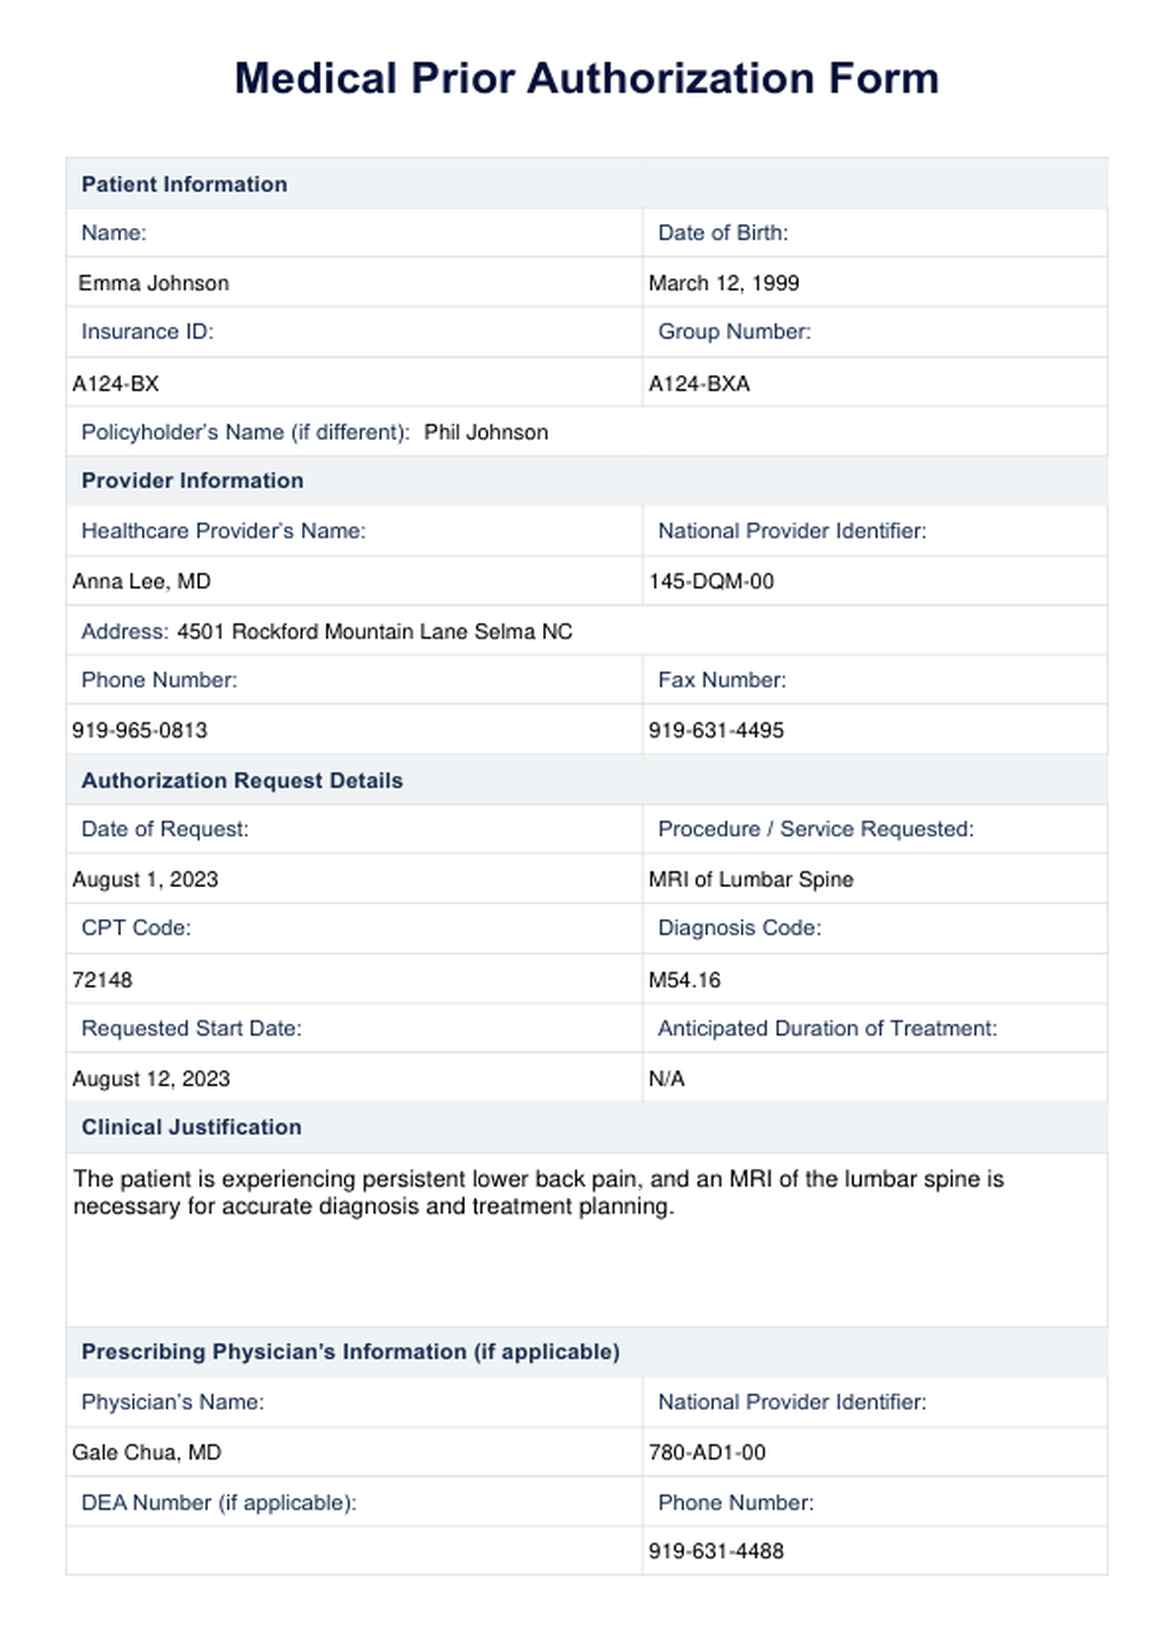 Medical Prior Authorization Form PDF Example